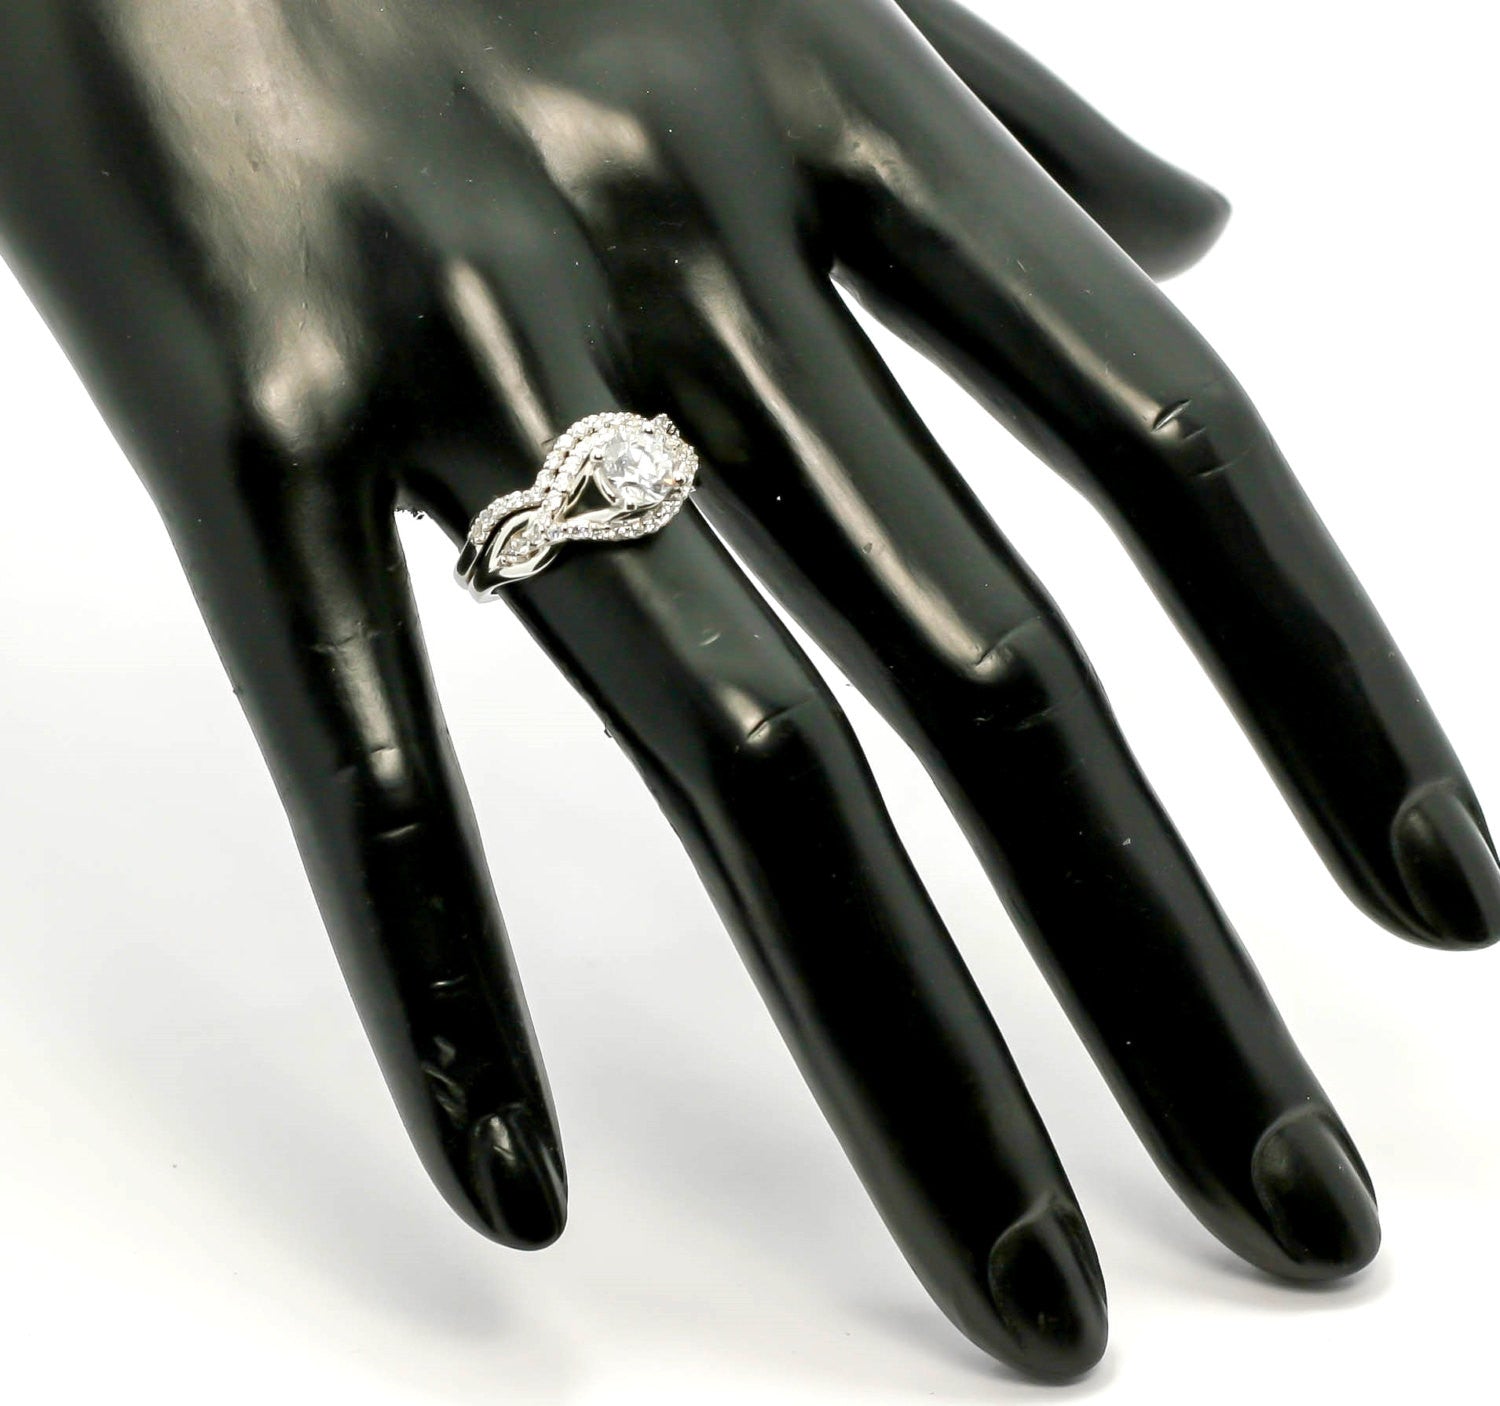 Unique Design, Diamond Engagement Ring and Wedding Band Set,  Bridal Set, Wedding Set, 6.5 mm "Forever Brilliant" Moissanite Anniversary Ring - FBY11573